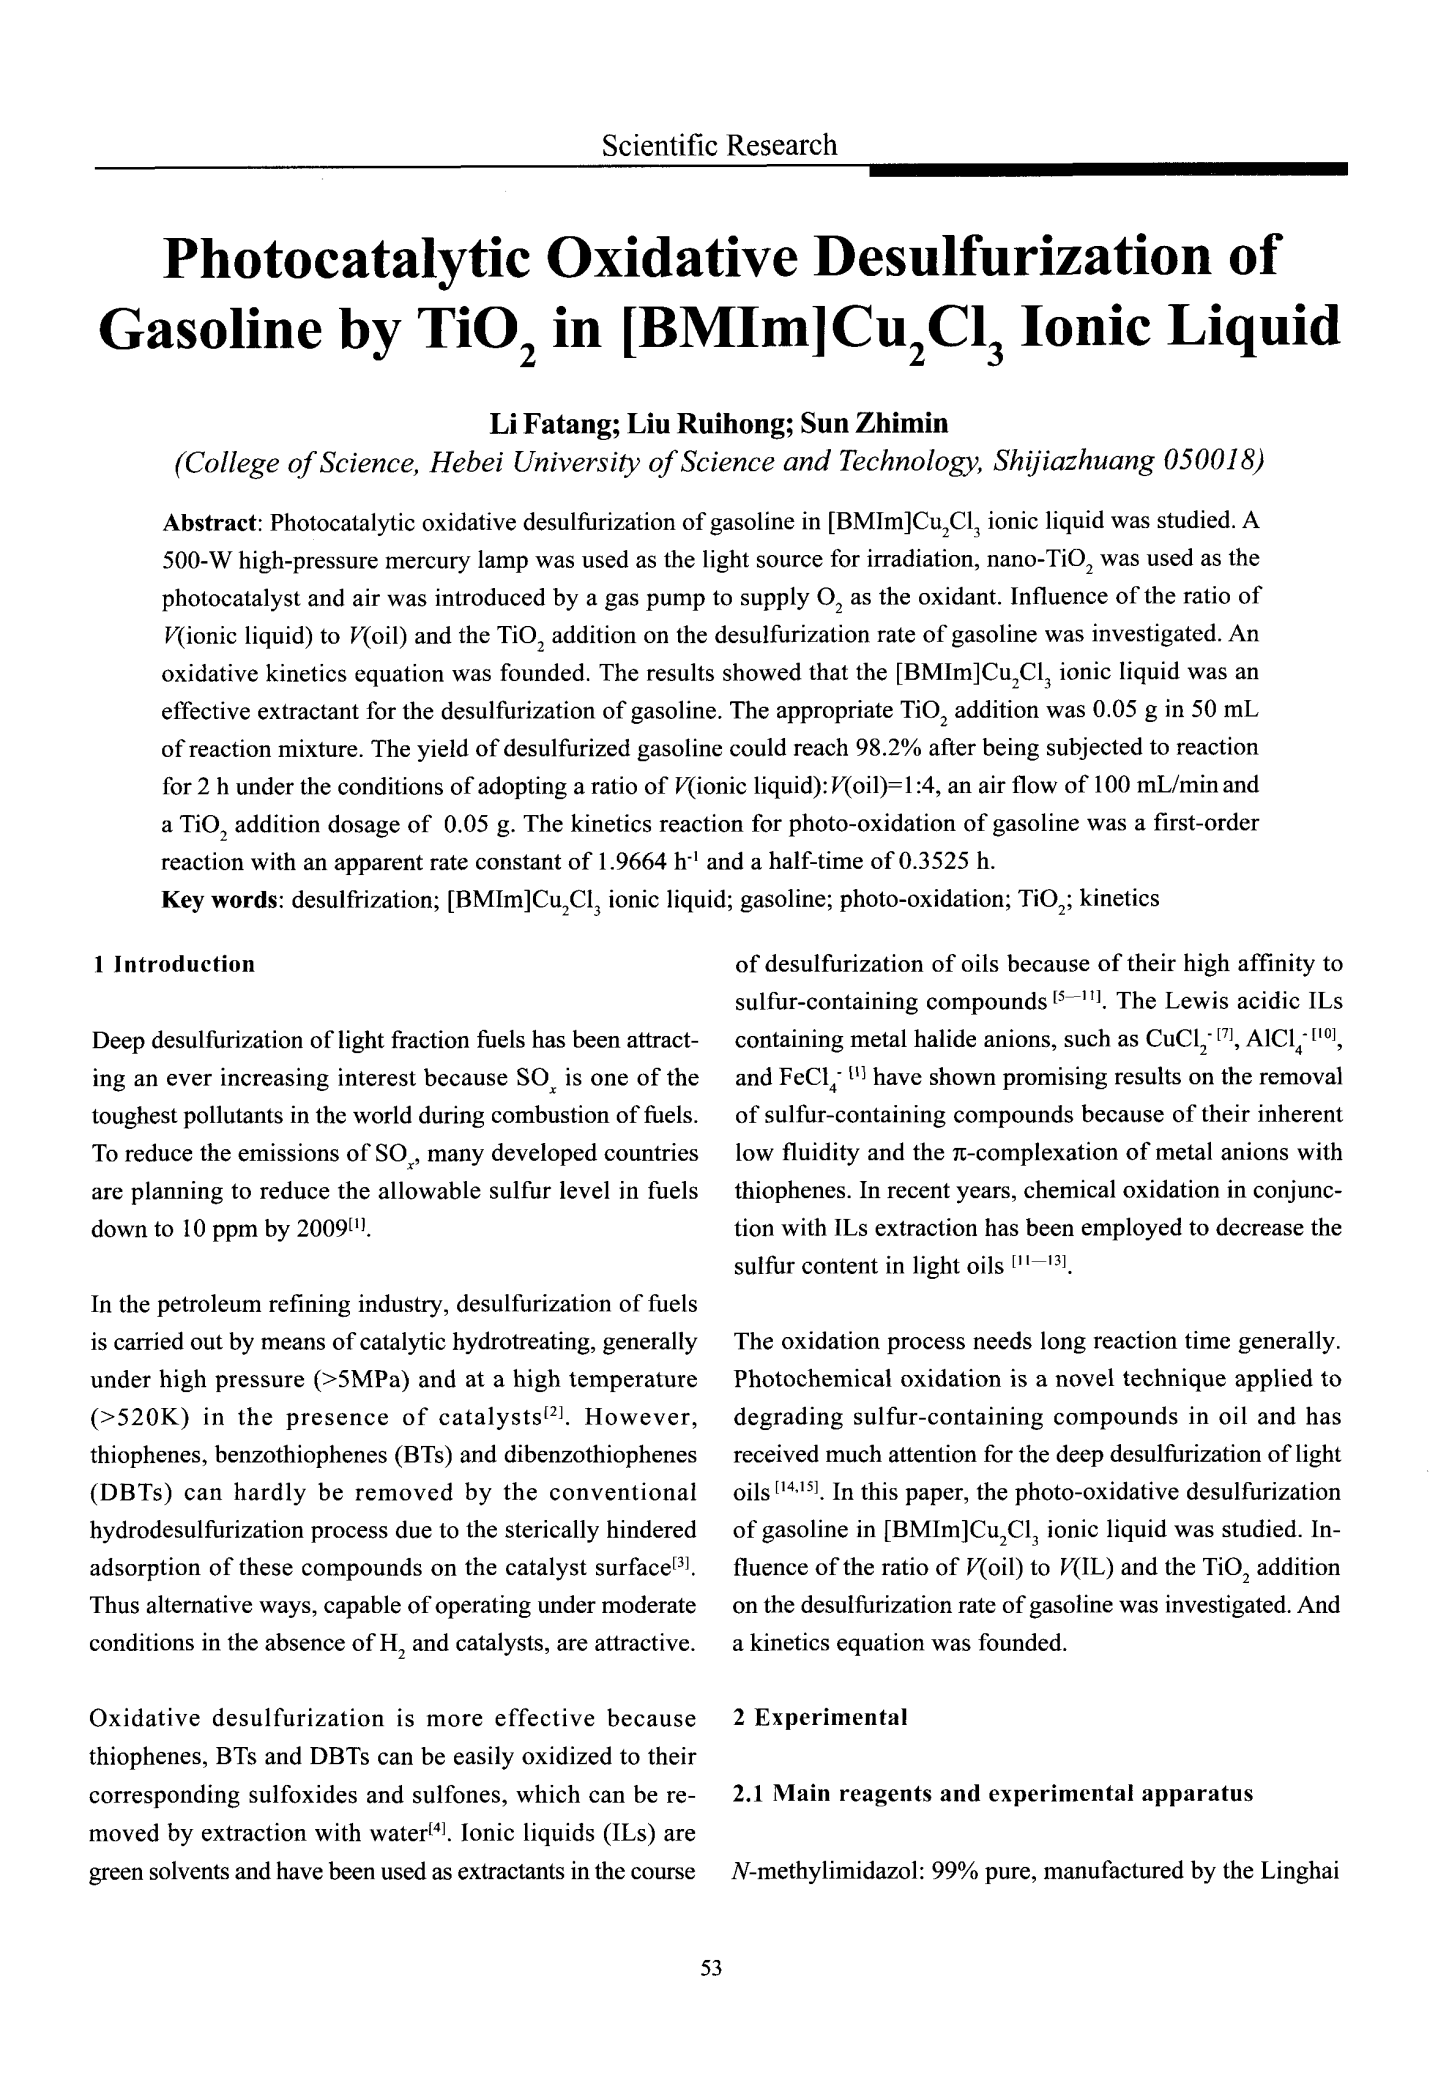 Photocatalytic Oxidative Desulfurization of Gasoline by TiO2 in [BMIm]Cu2Cl3 Ionic Liquid